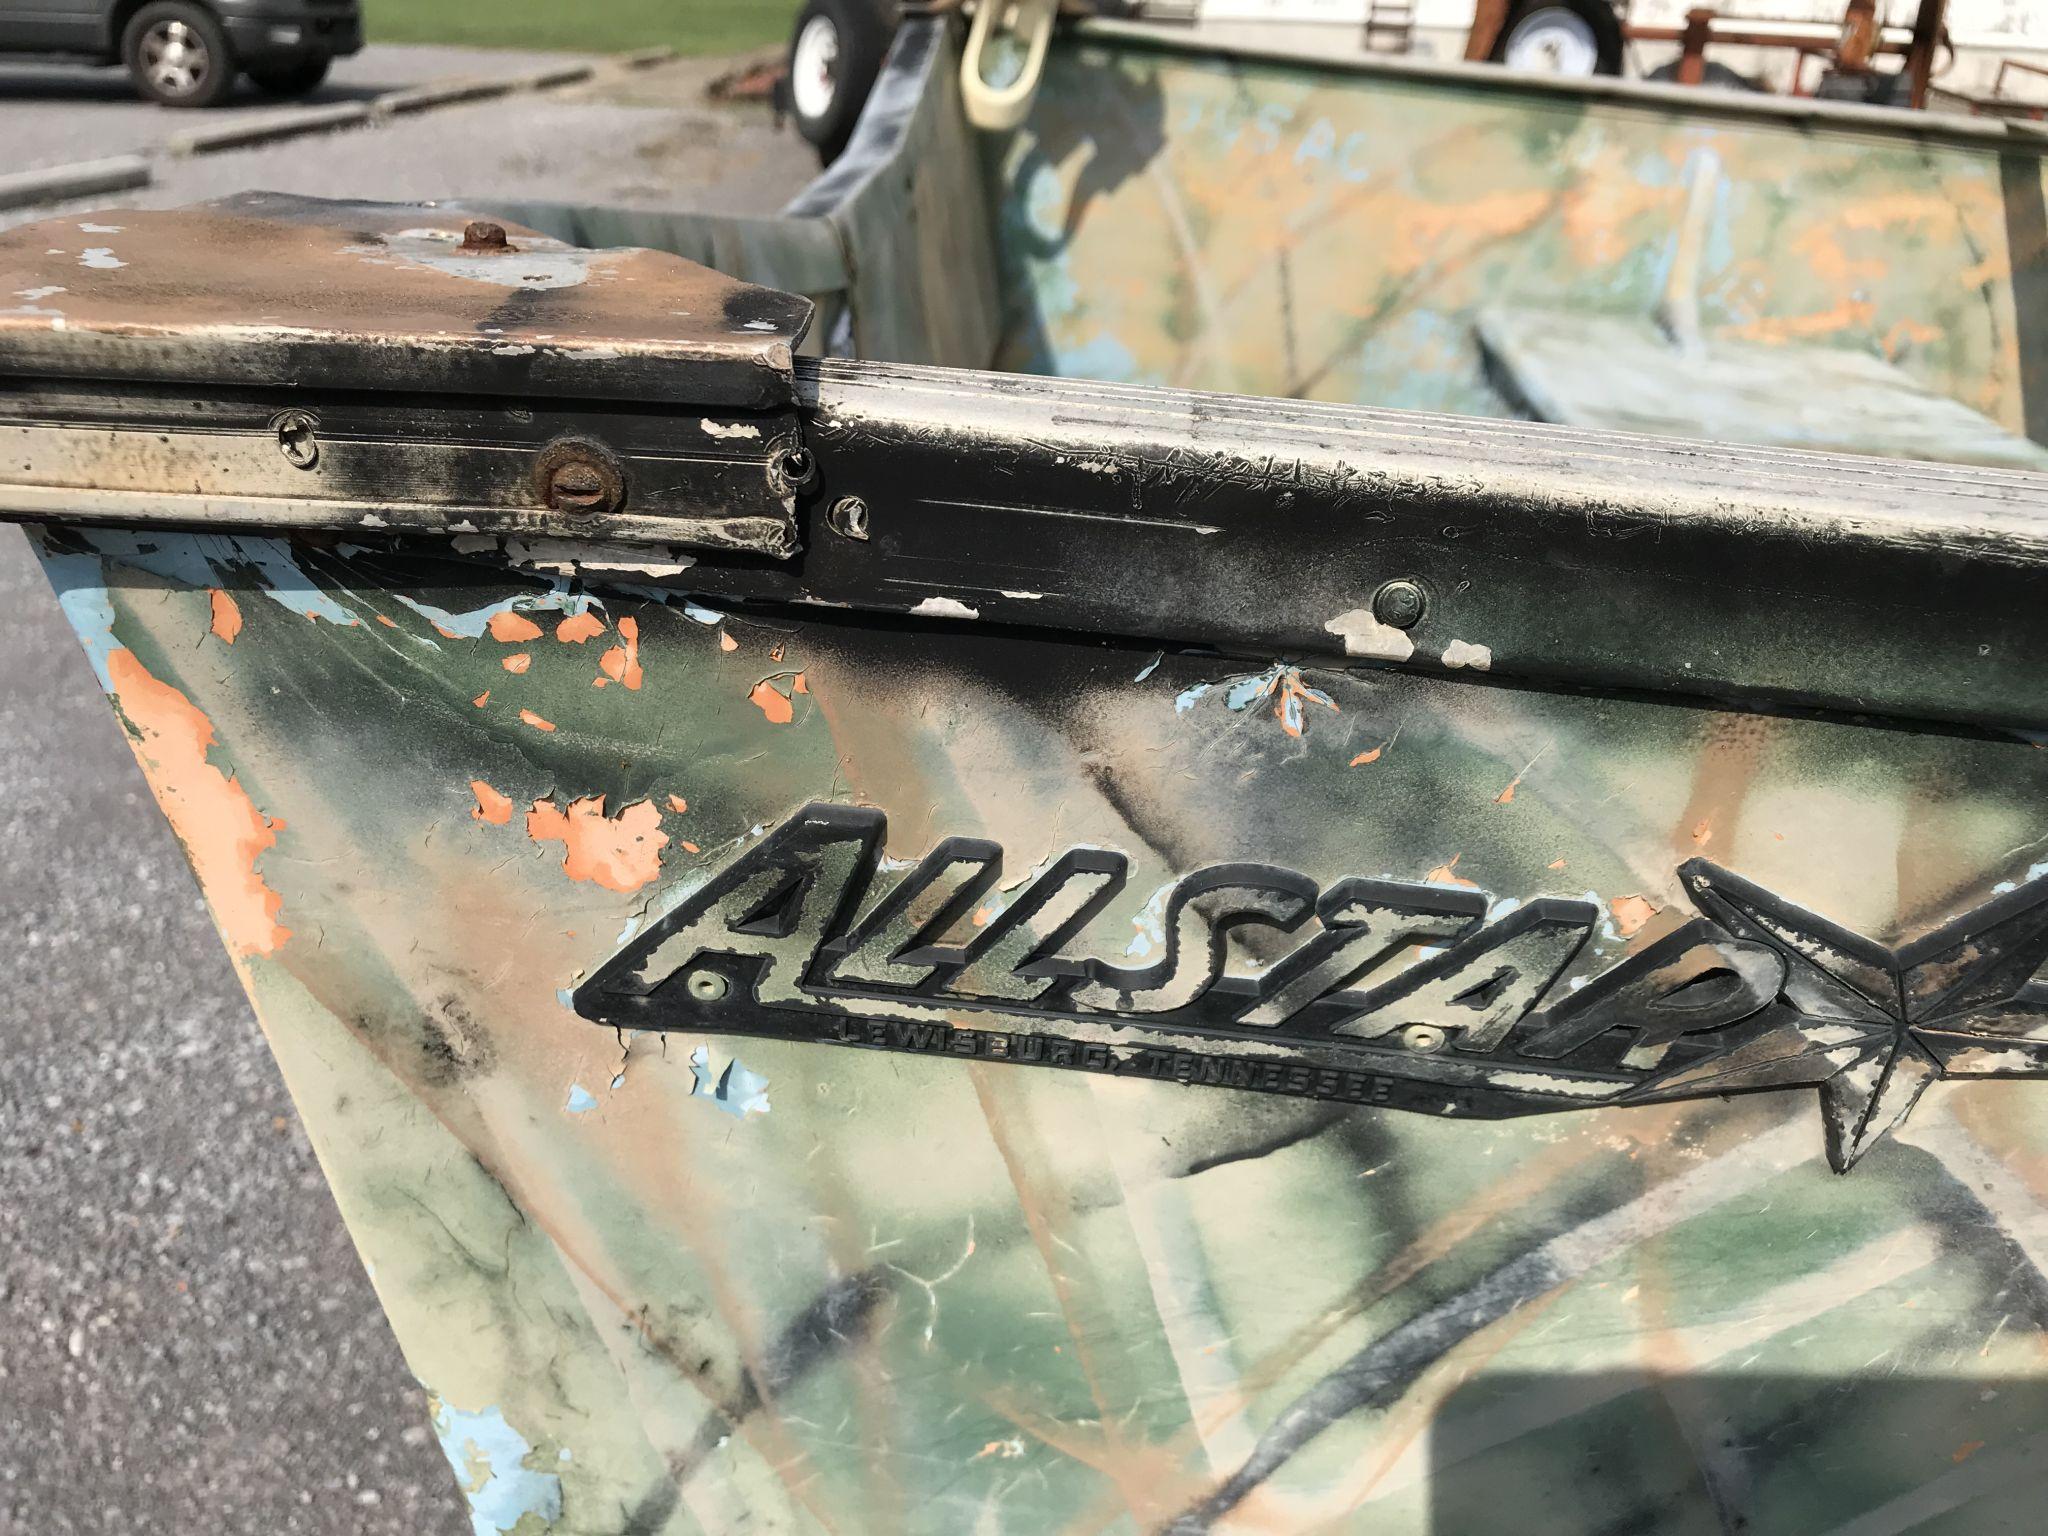 Allstar 15' fiberglass boat with Shoreline trailer, no plates, no HIN/VIN, no prior registration is 